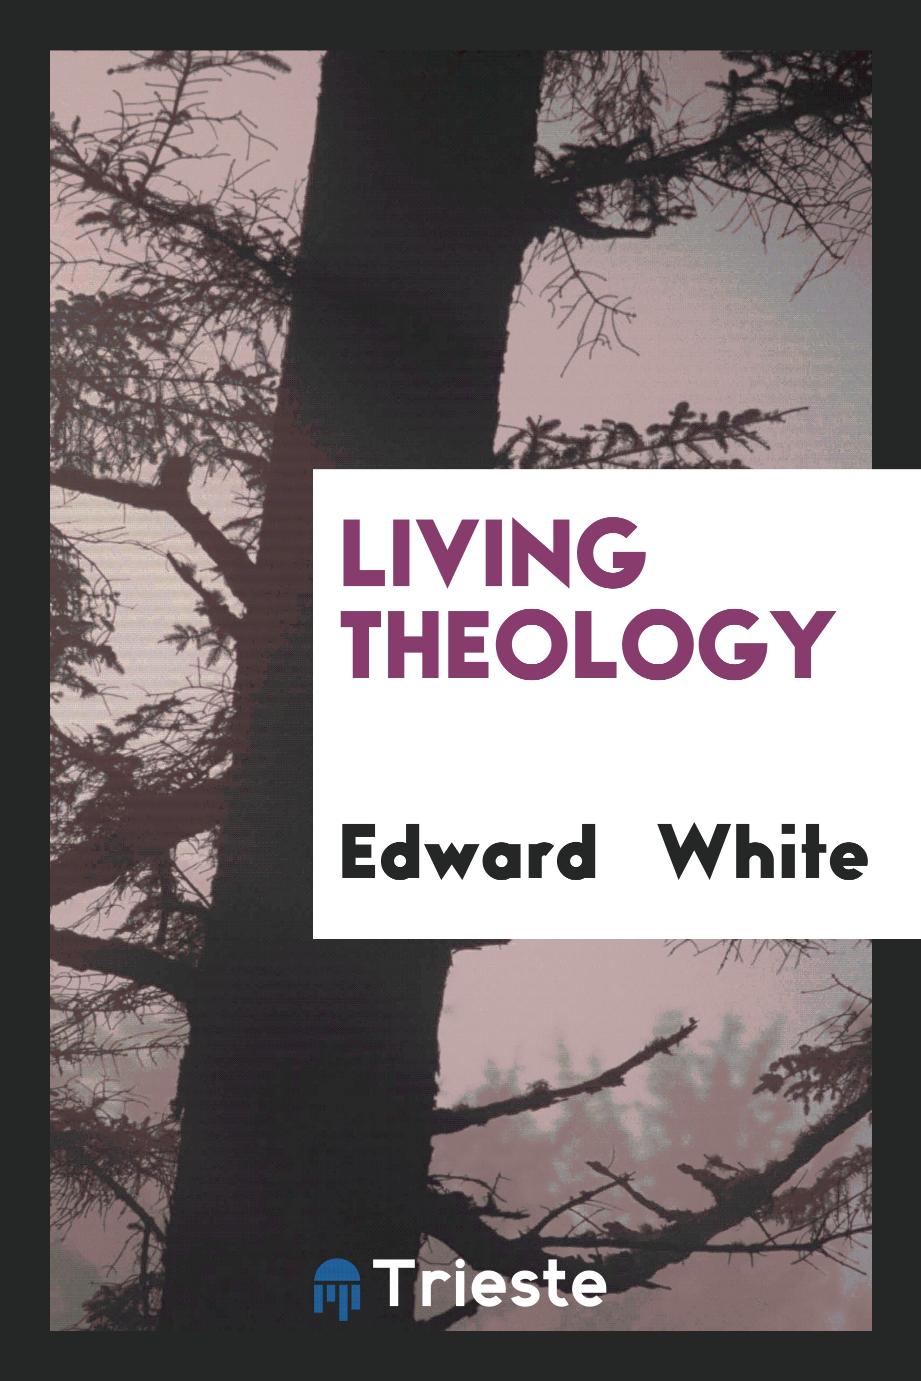 Living theology